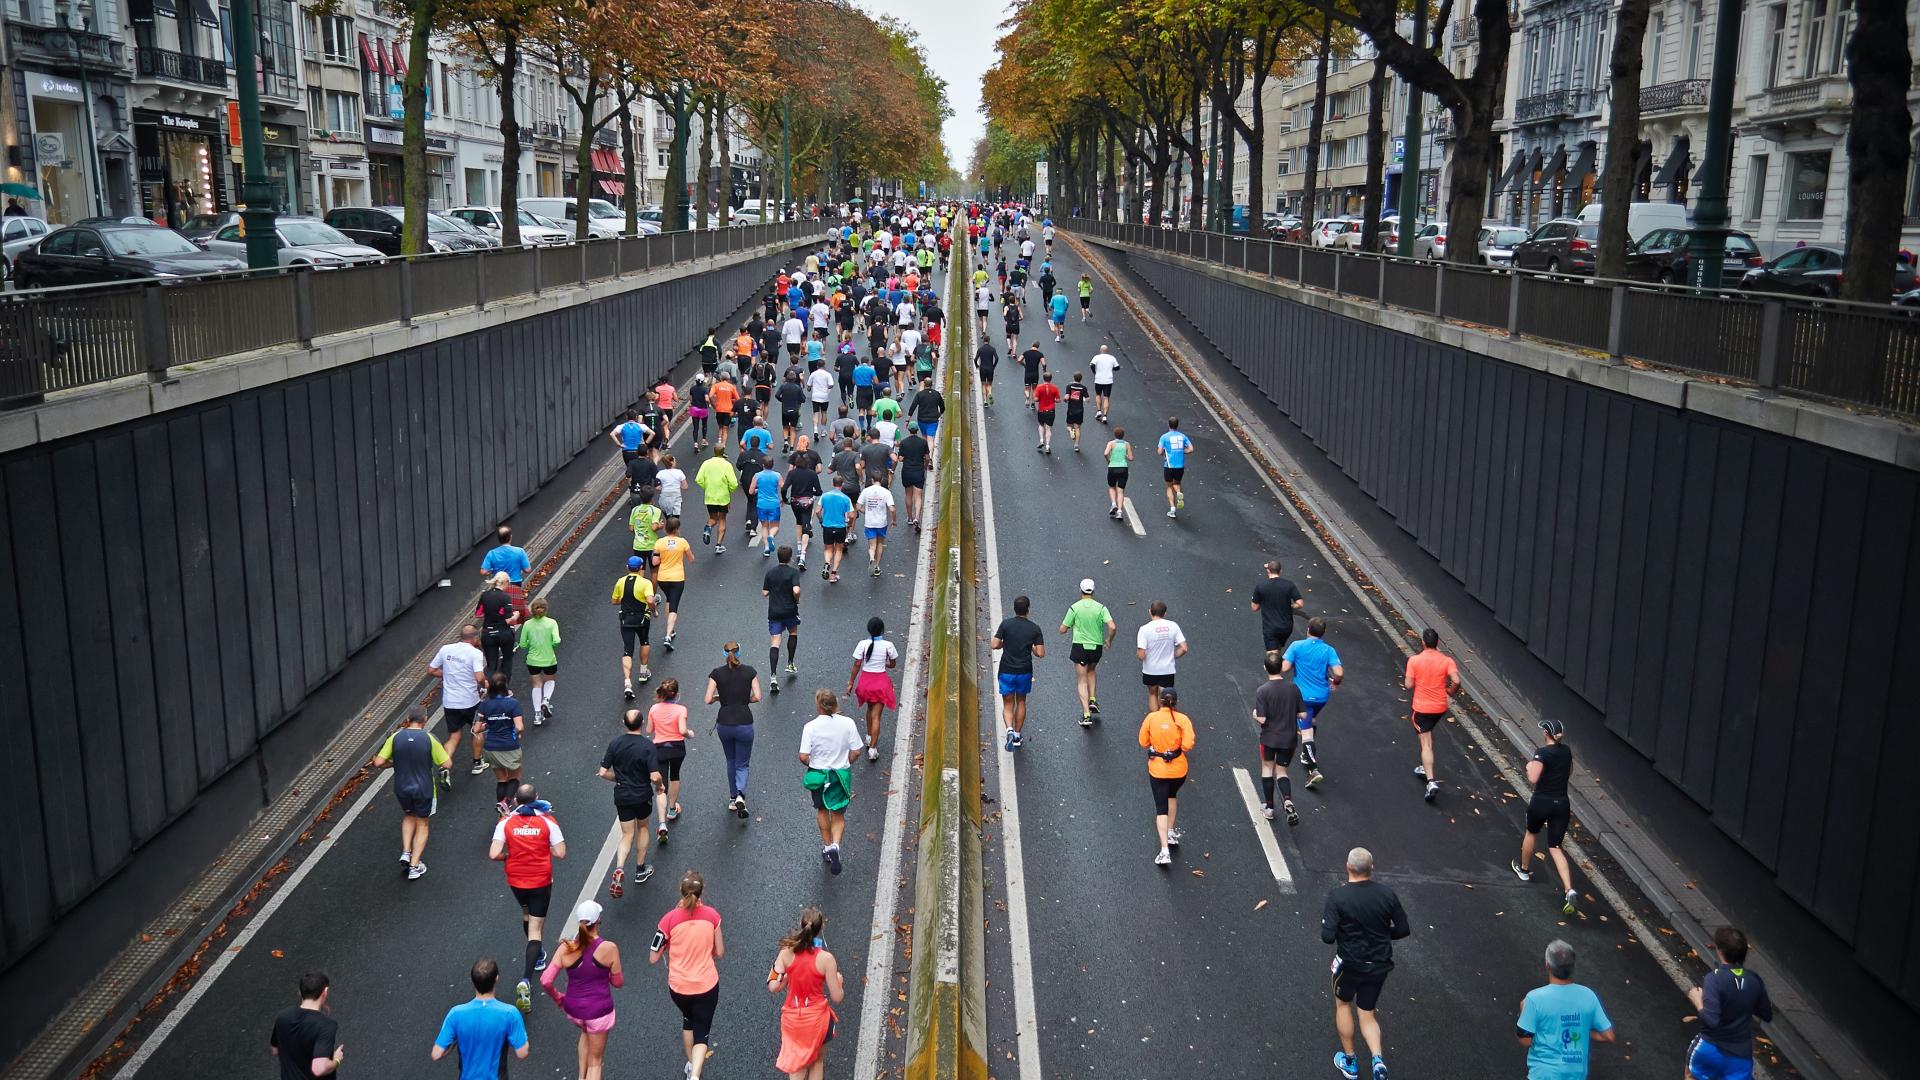 Marathon runners travel up a road